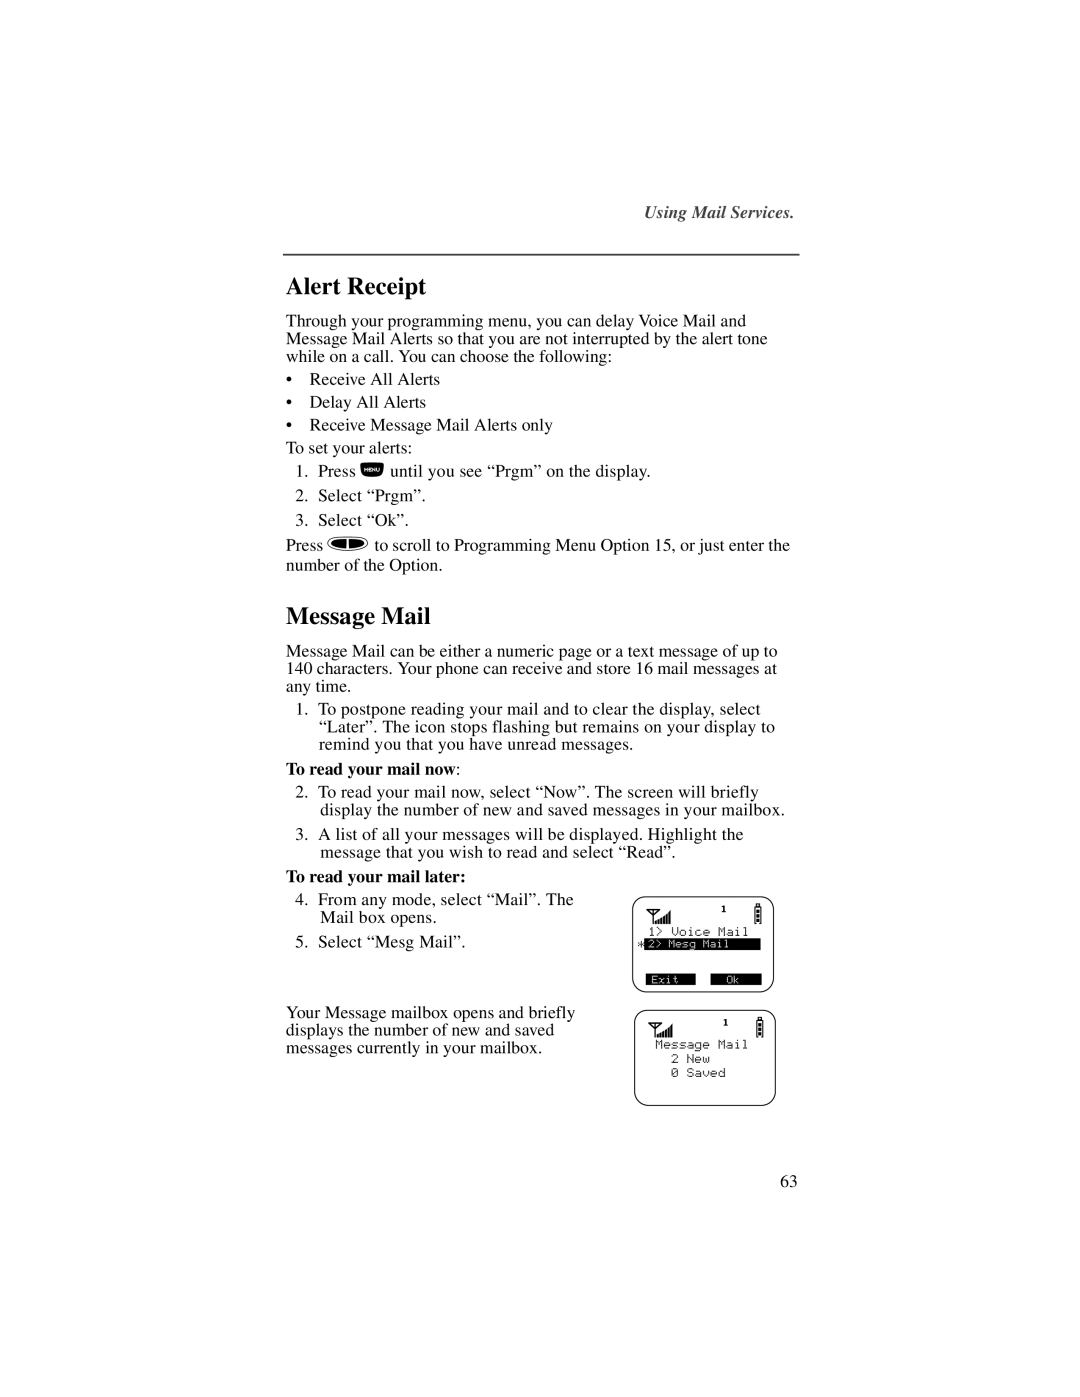 Motorola i2000plus manual Alert Receipt, Message Mail 